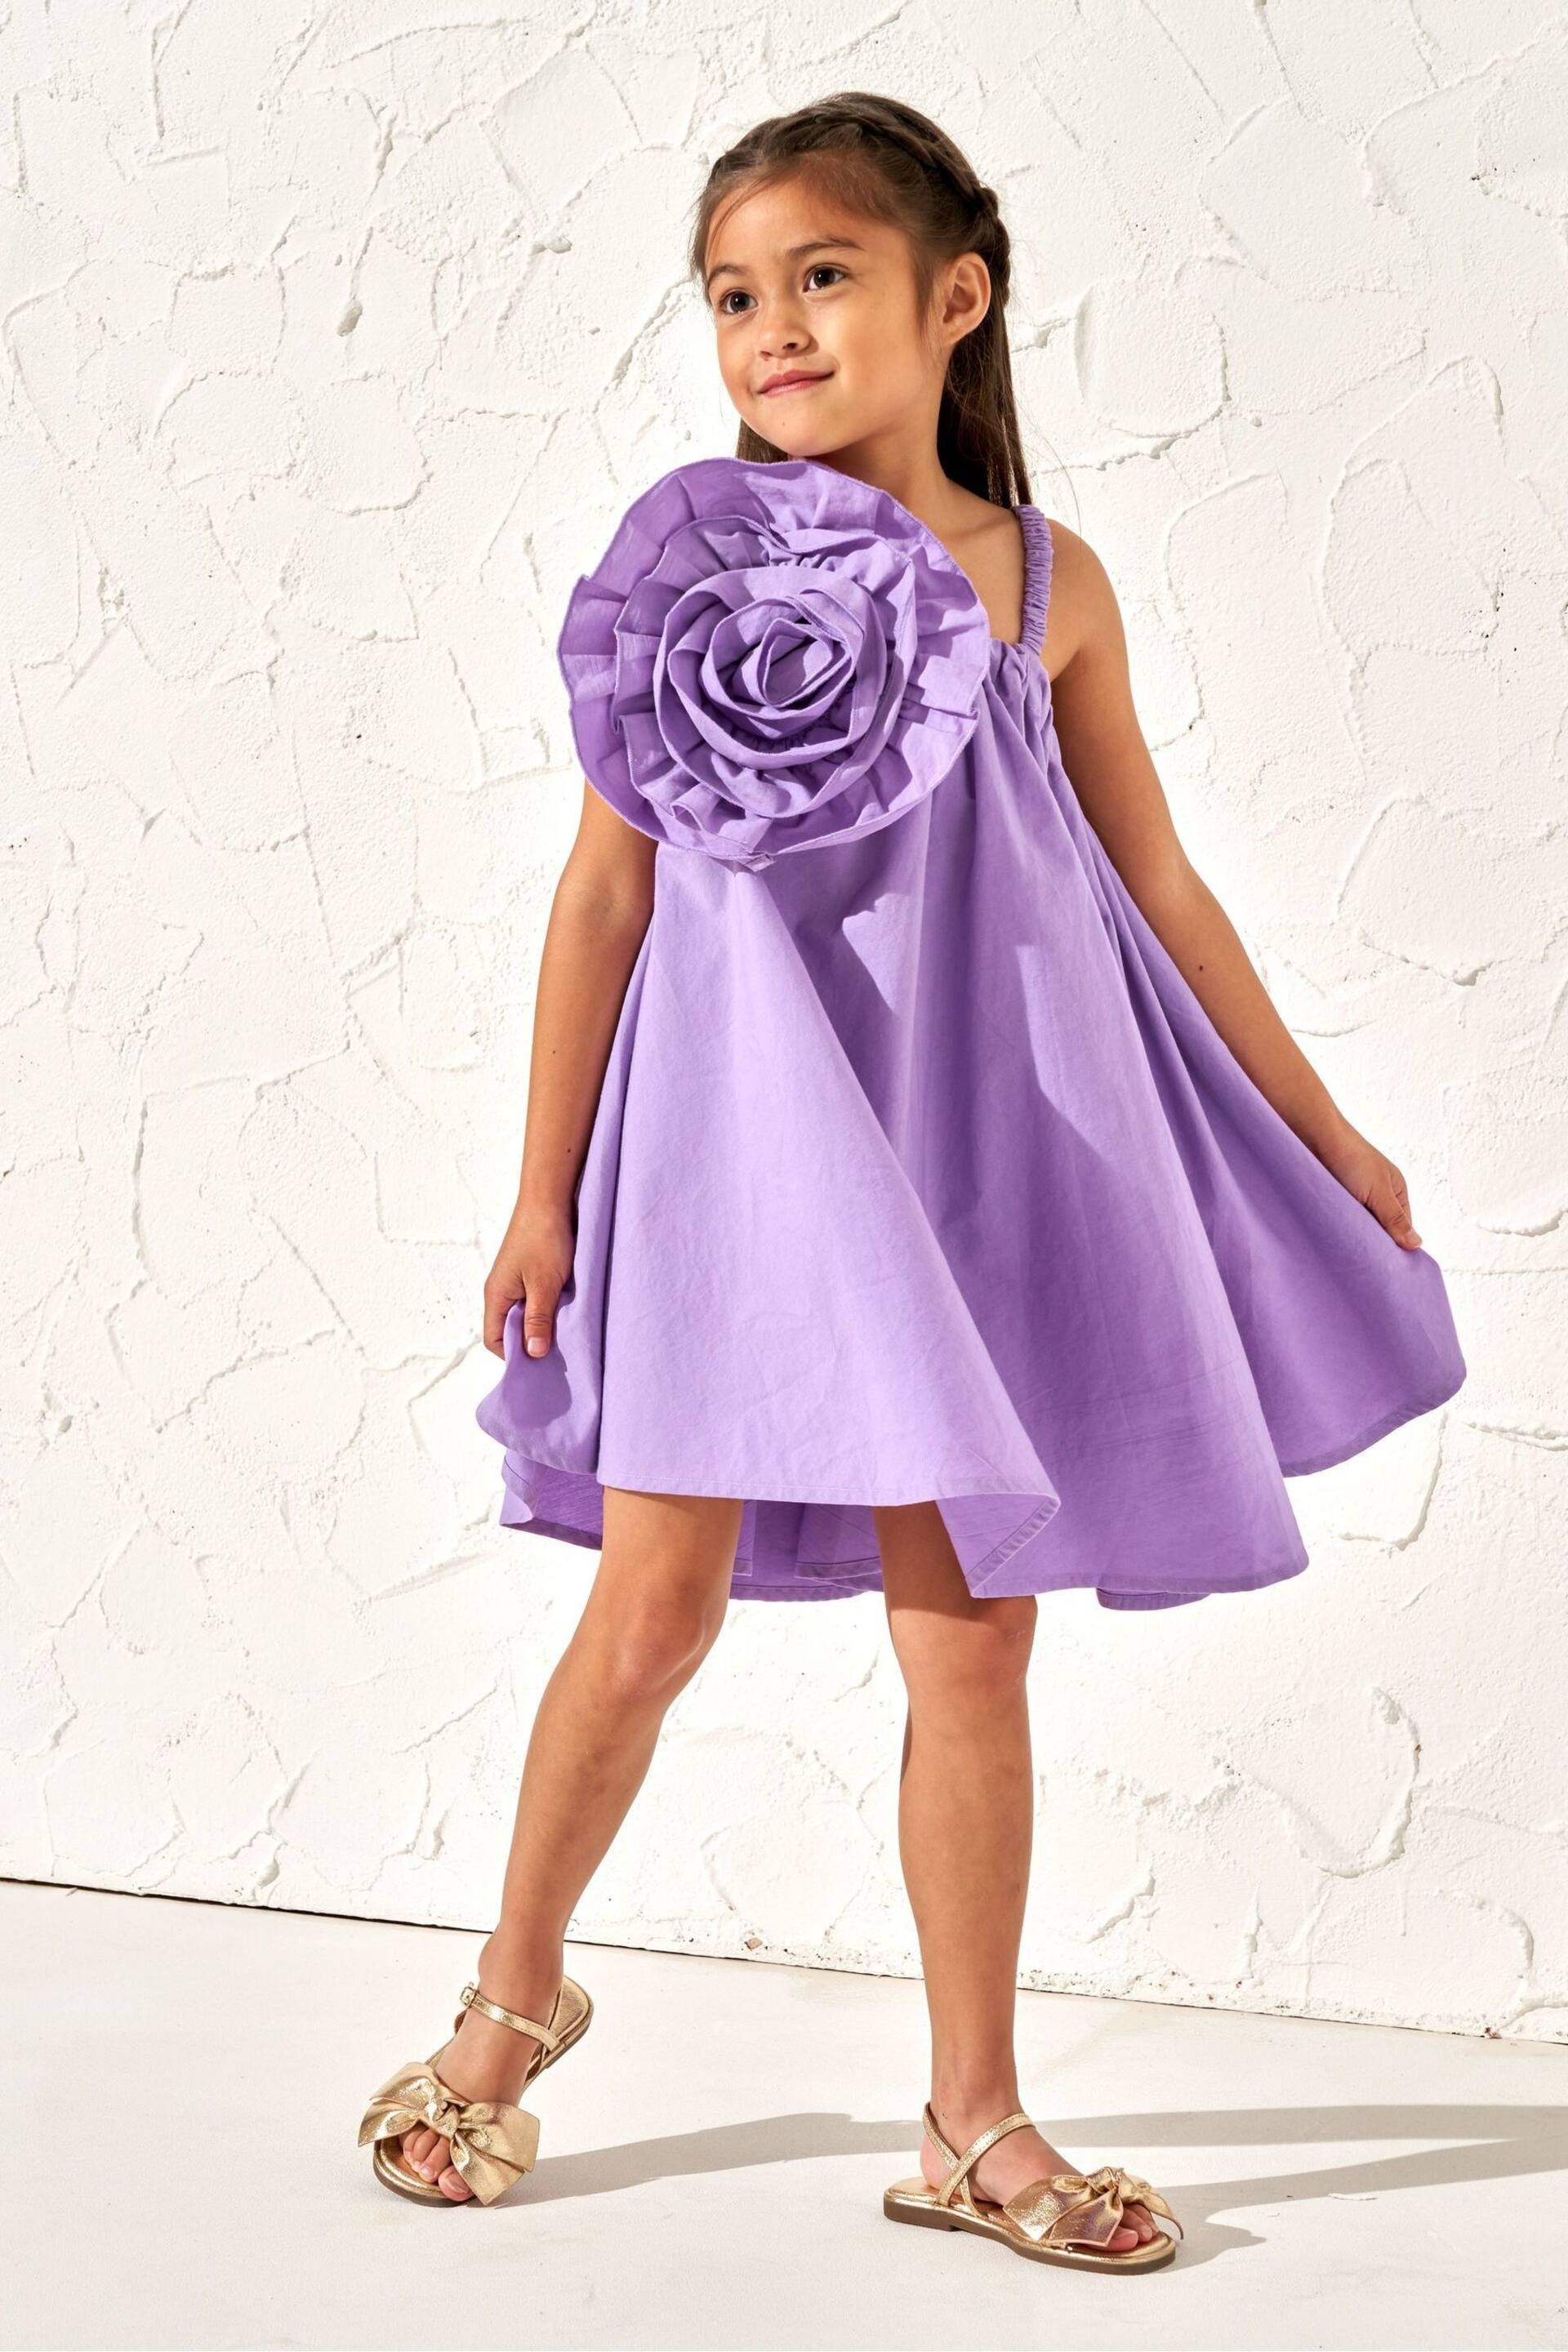 Angel & Rocket Purple Carrie Corsage Swing Dress - Image 1 of 6